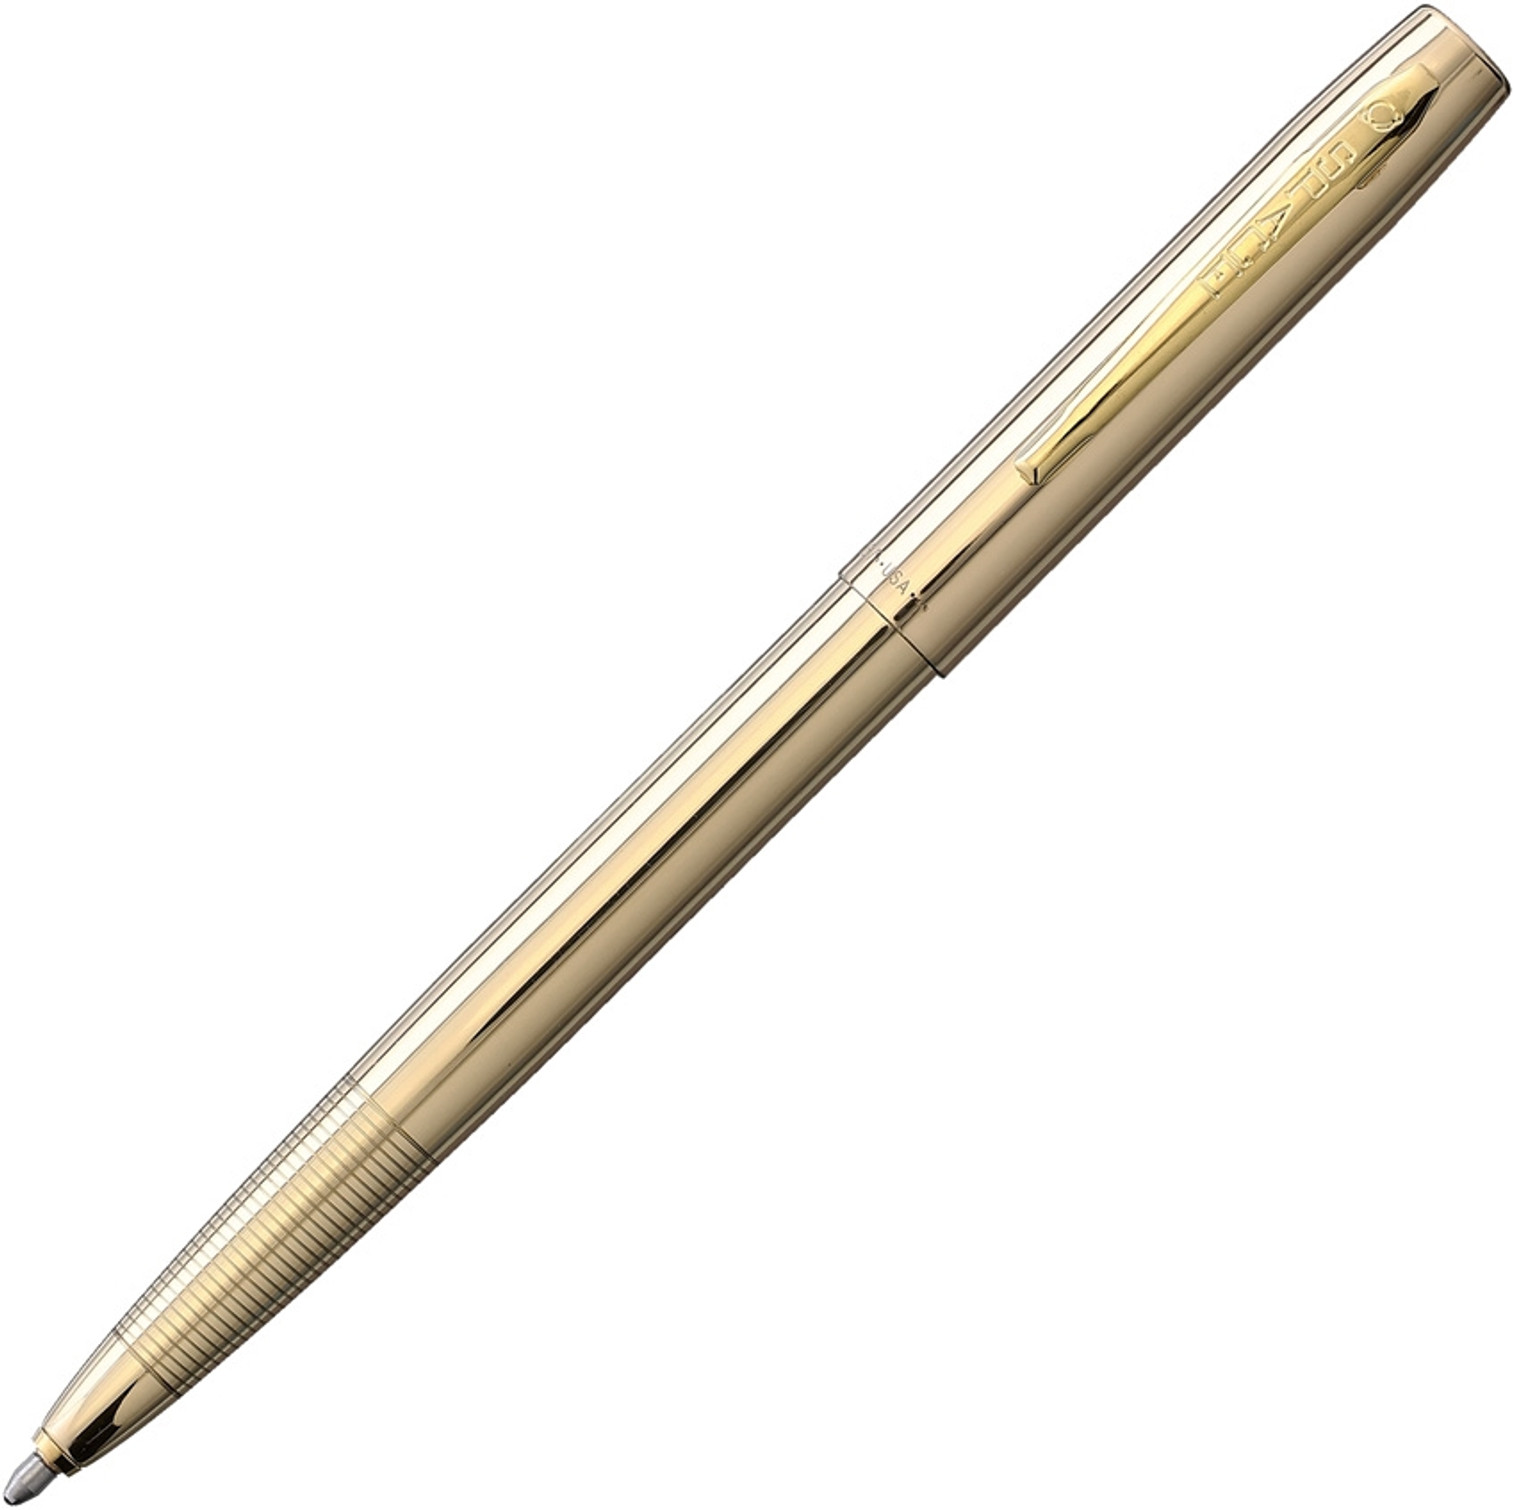 Cap-O-Matic Space Pen